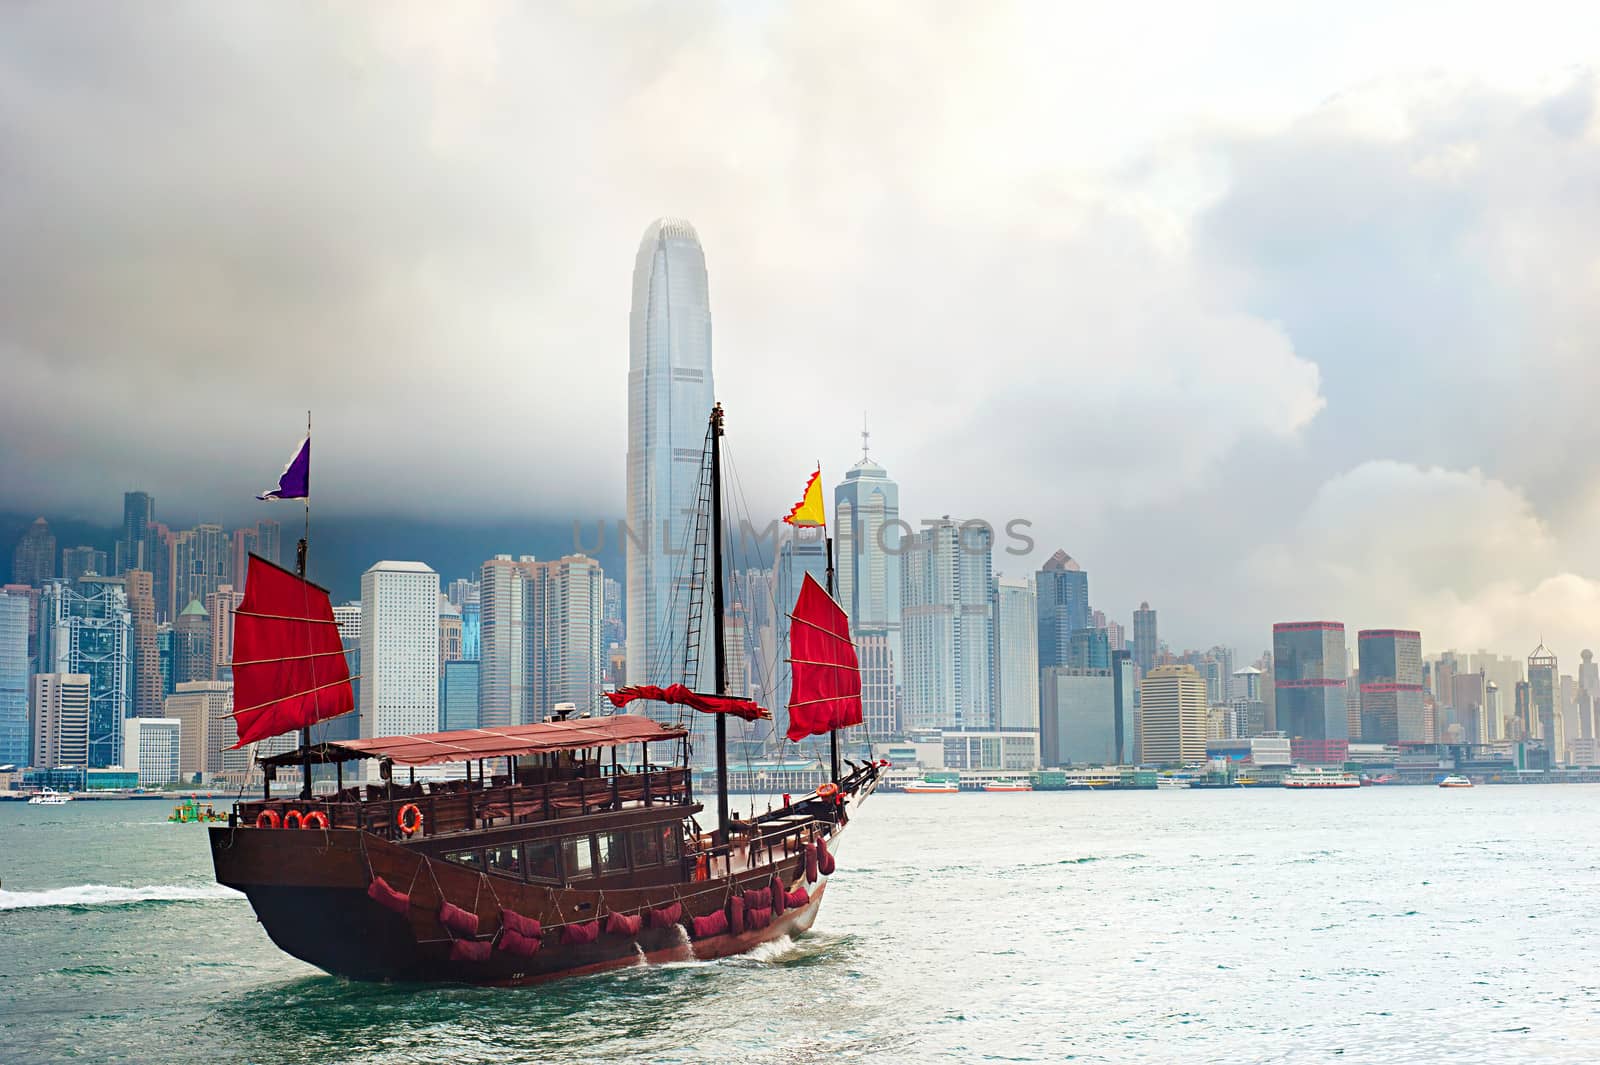 Hong Kong sailboat by joyfull